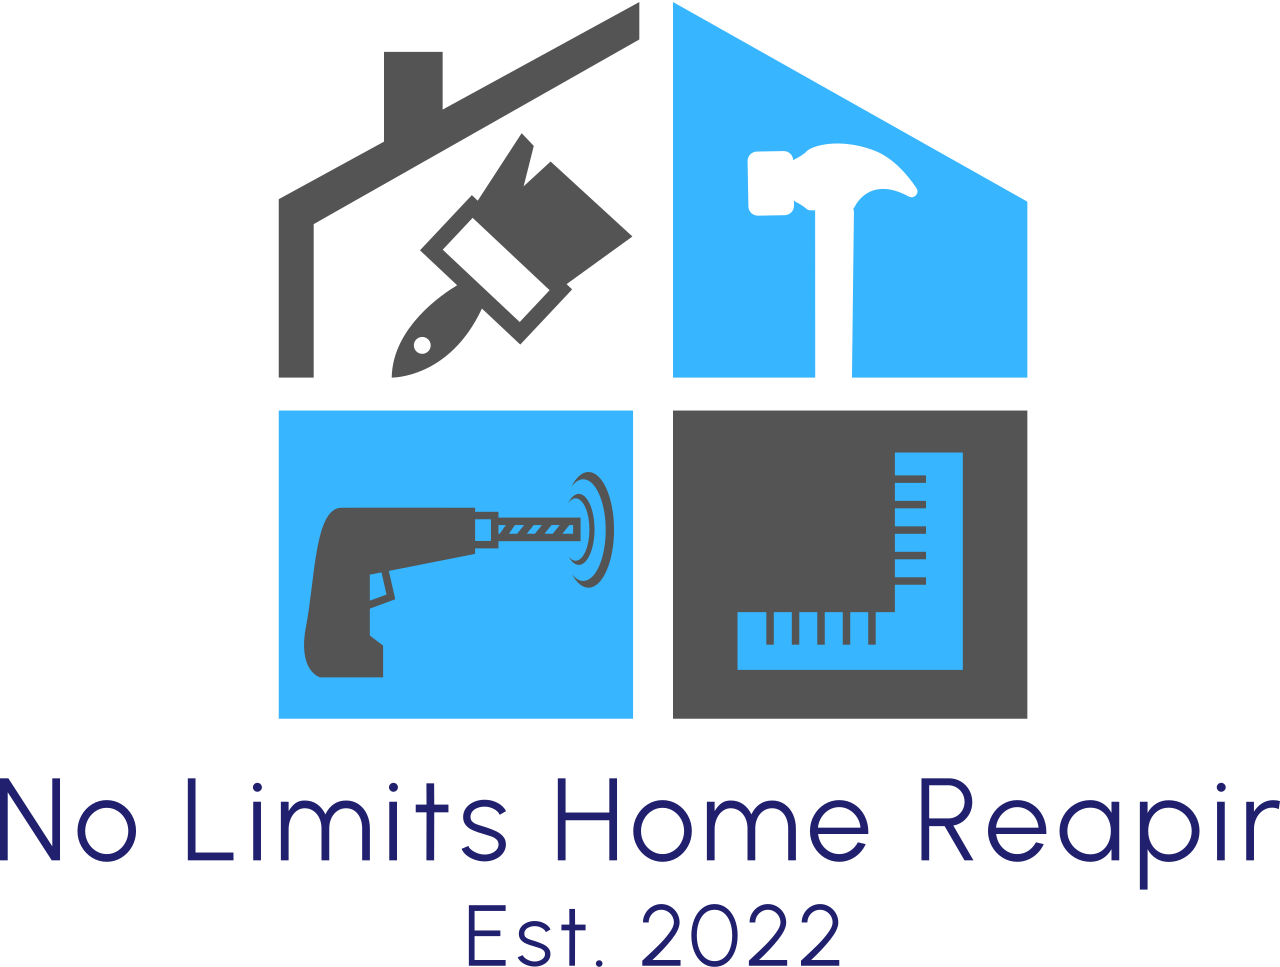 No Limits home repair 's web page